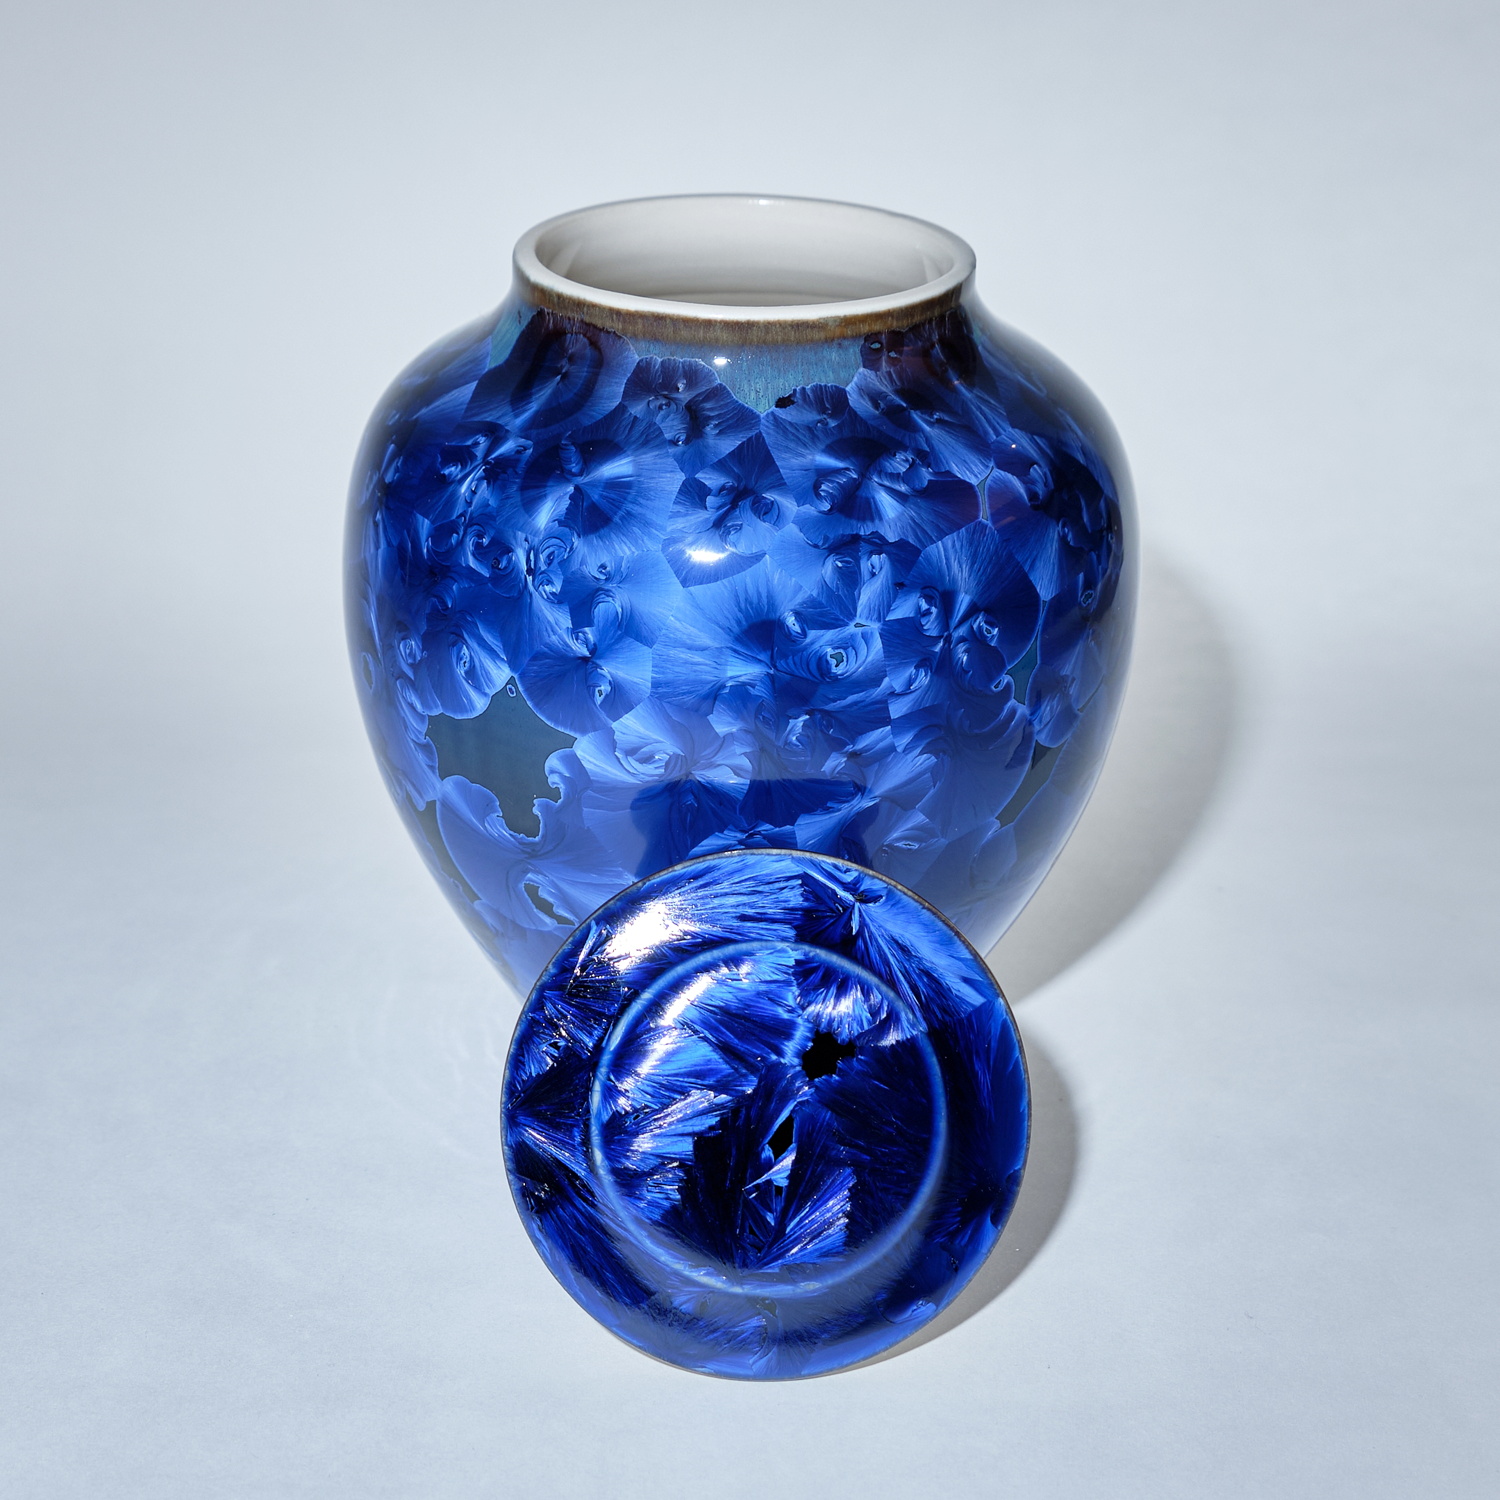 Yumiko Katsuya: Blue Lidded Container Product Image 1 of 1